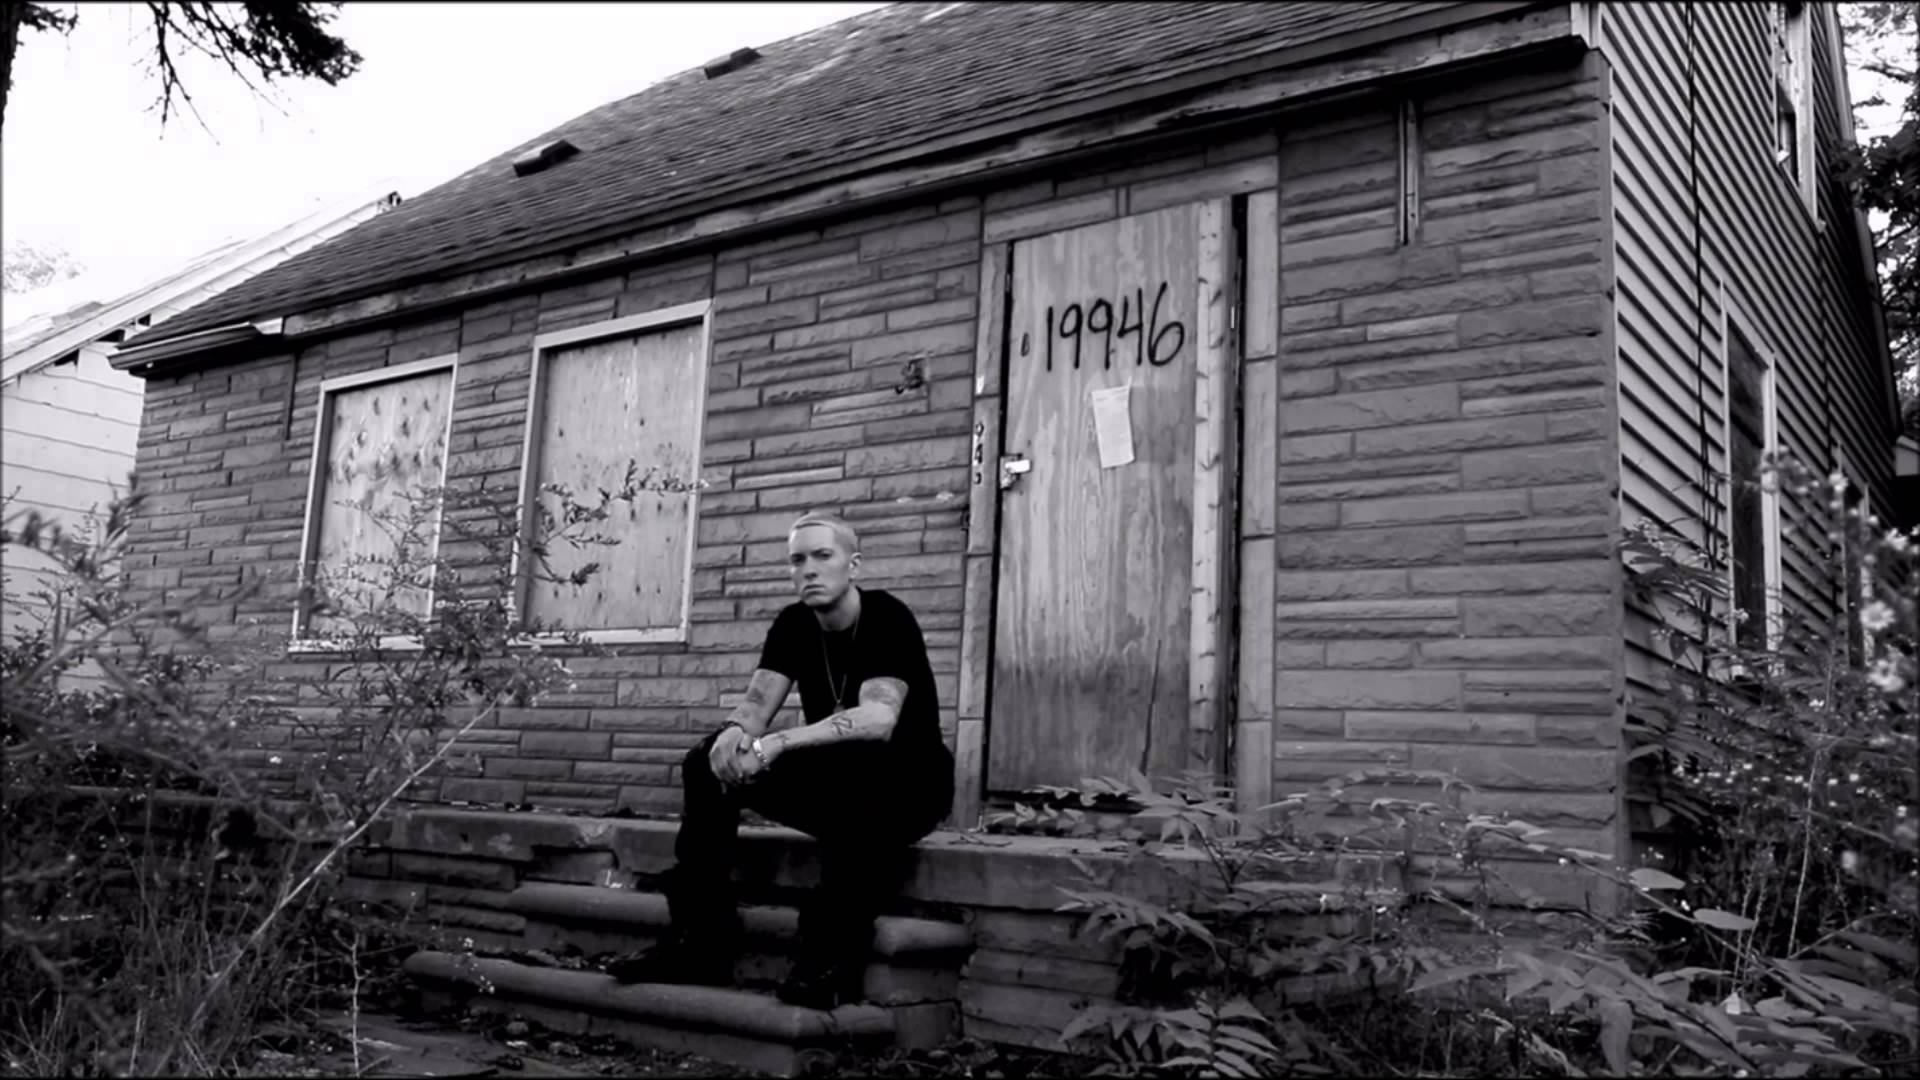 Marshall - Eminem / MMLP / MMLP 2 / Bad Meets Evil type beat - YouTube